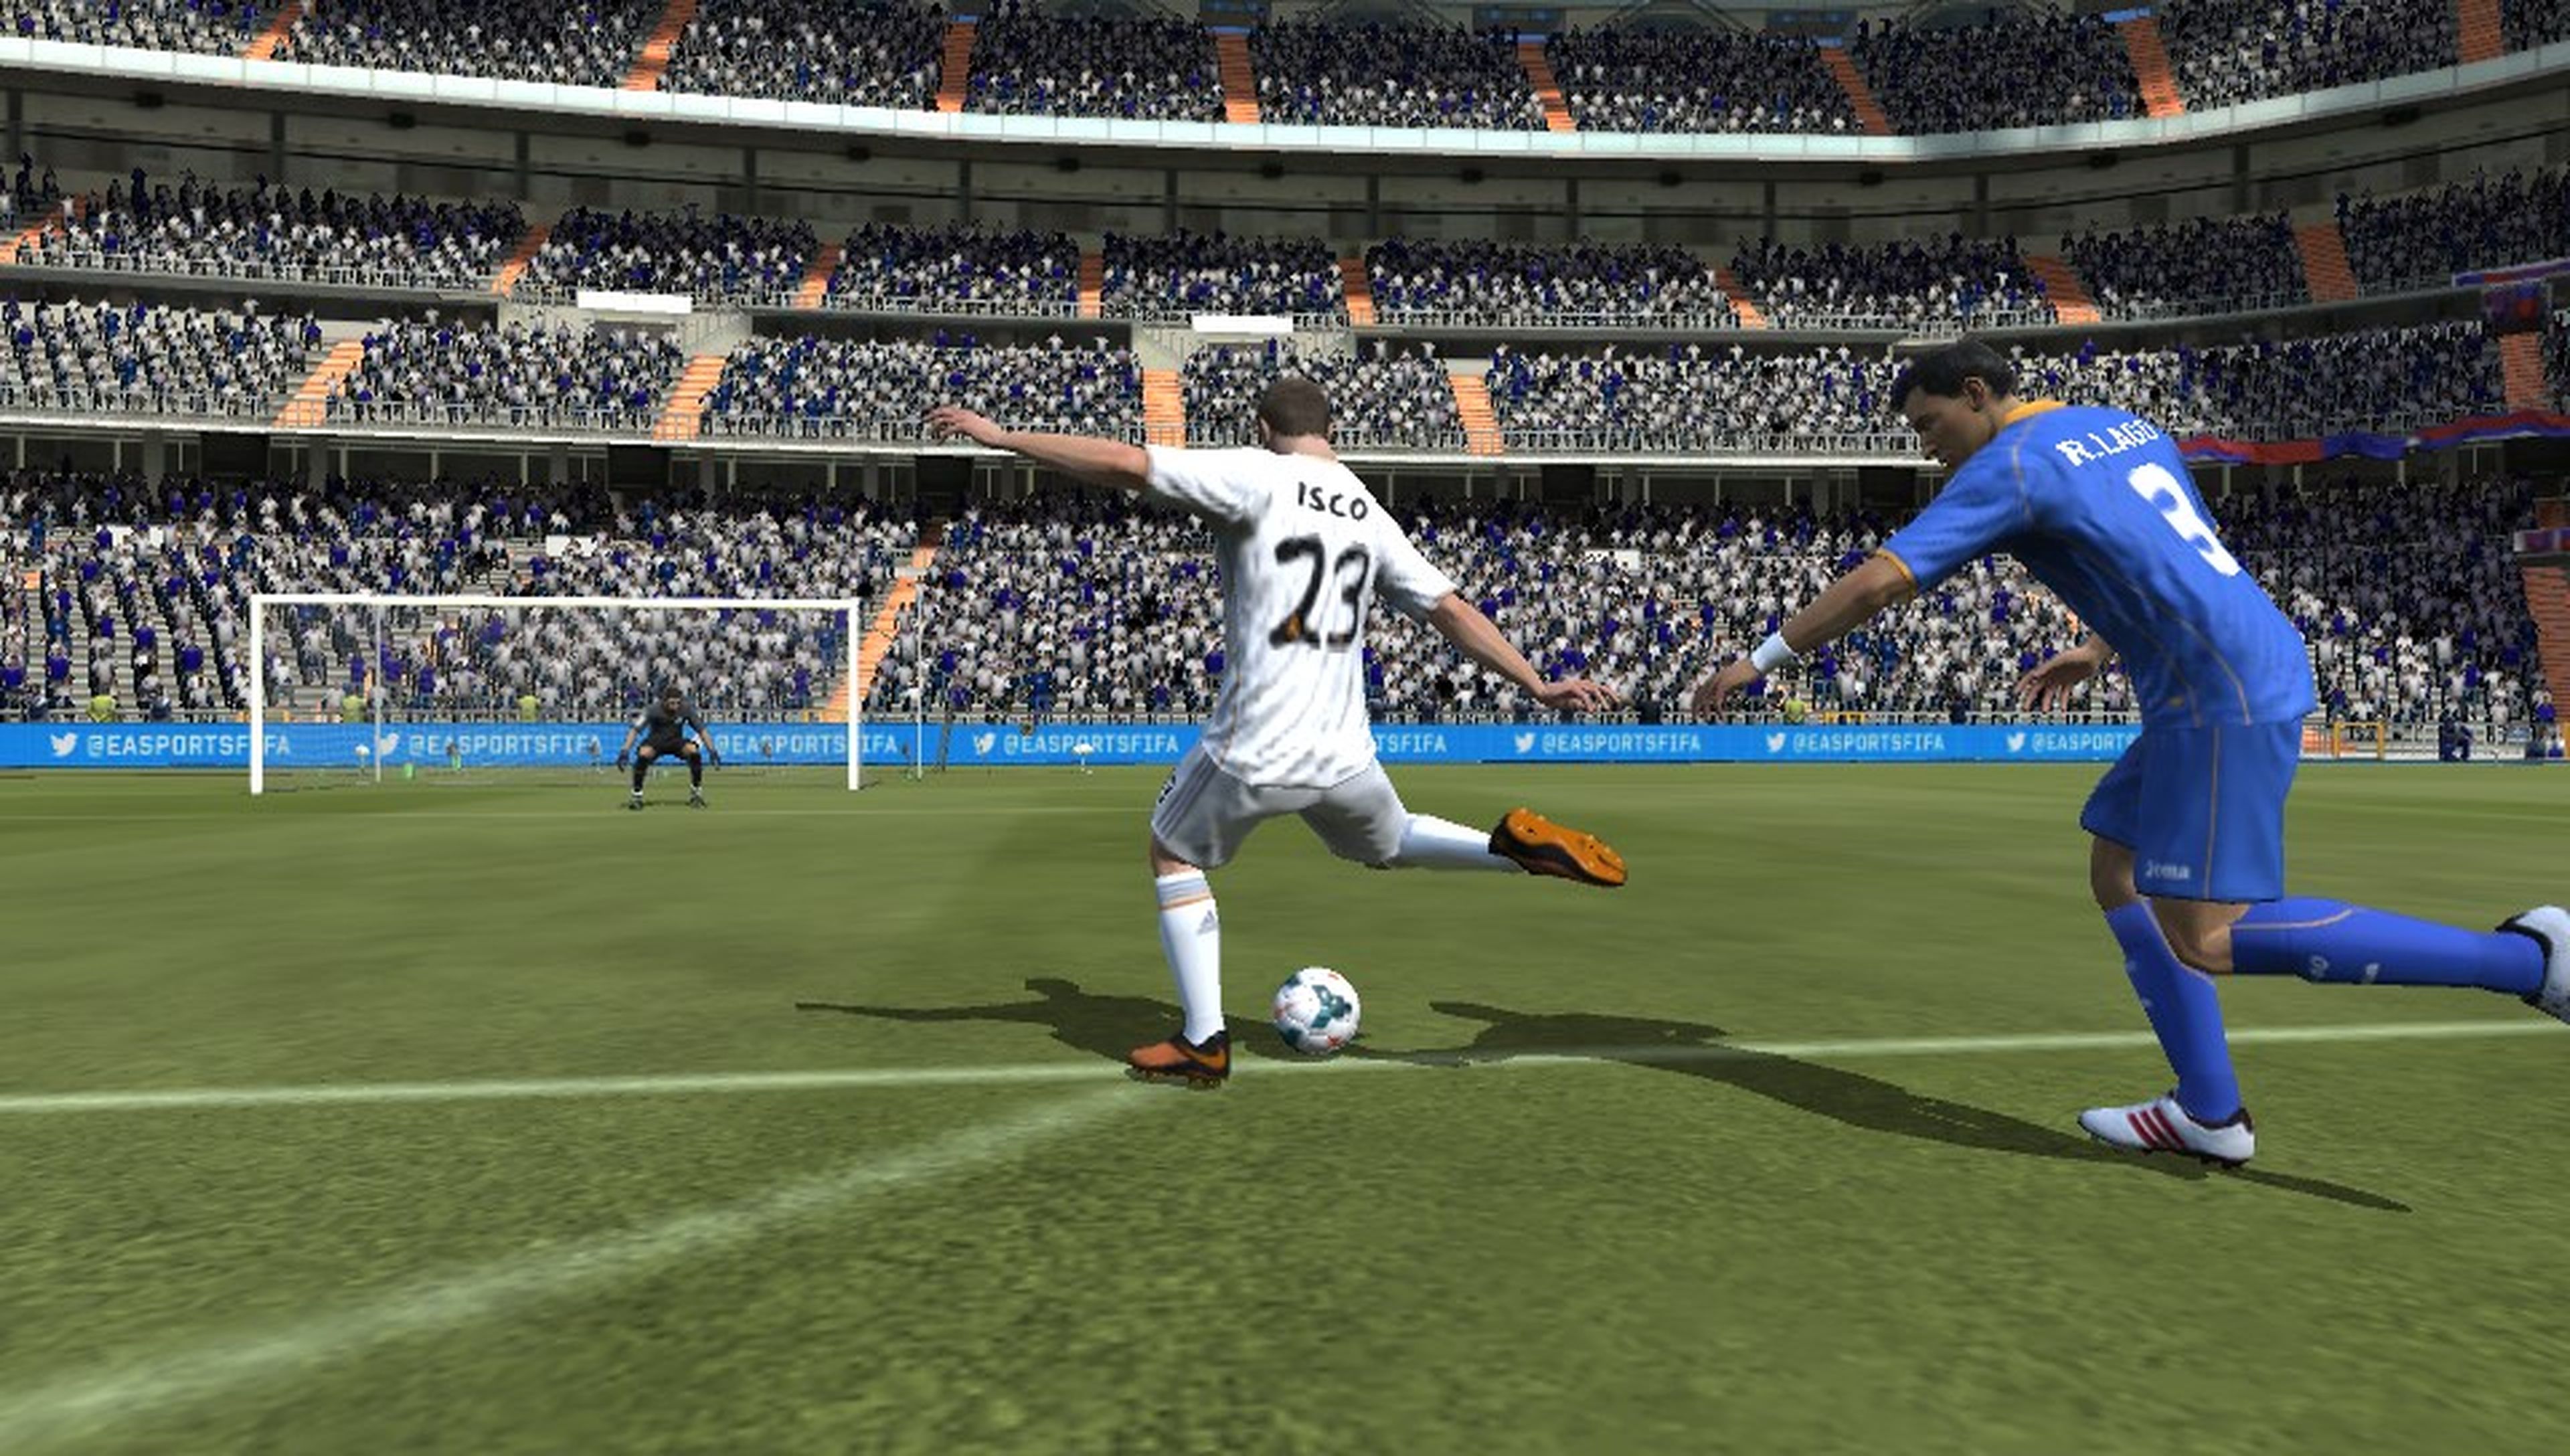 Análisis de FIFA 14 para PS Vita